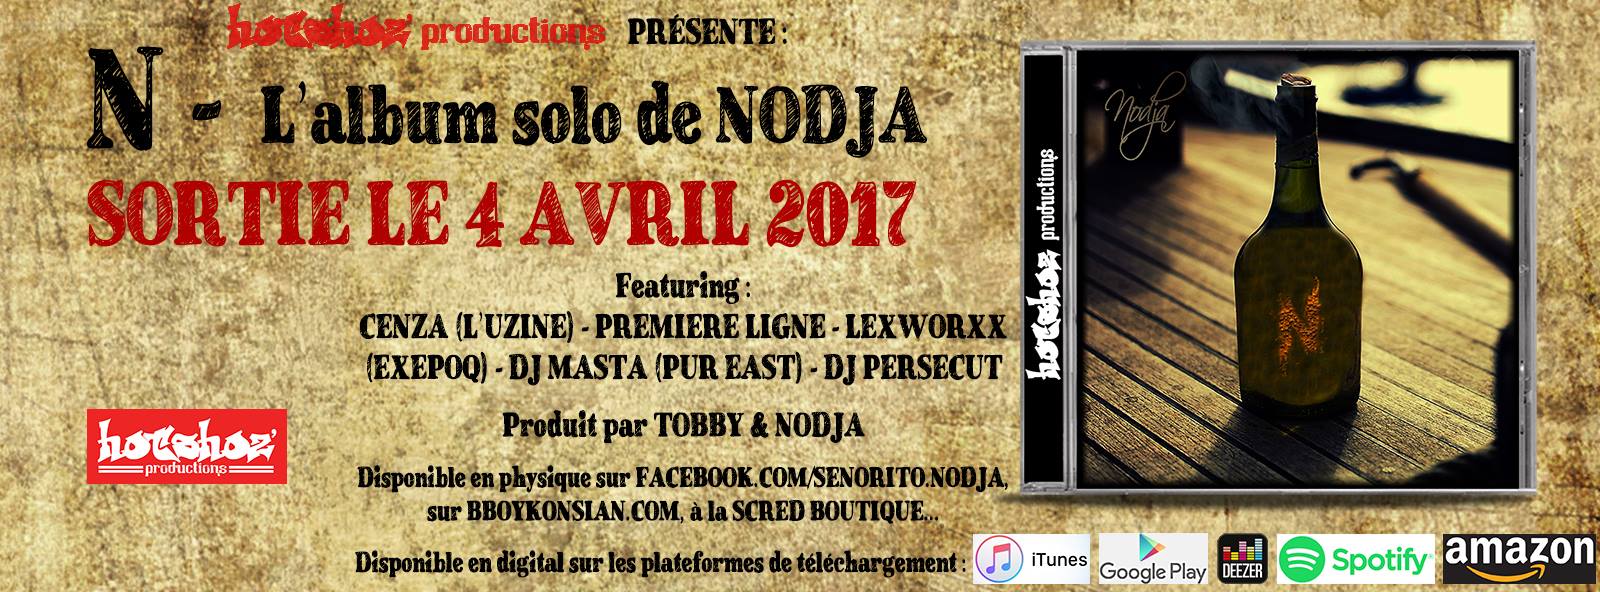 Nouvel album de Nodja "N" disponible en CD et Digital